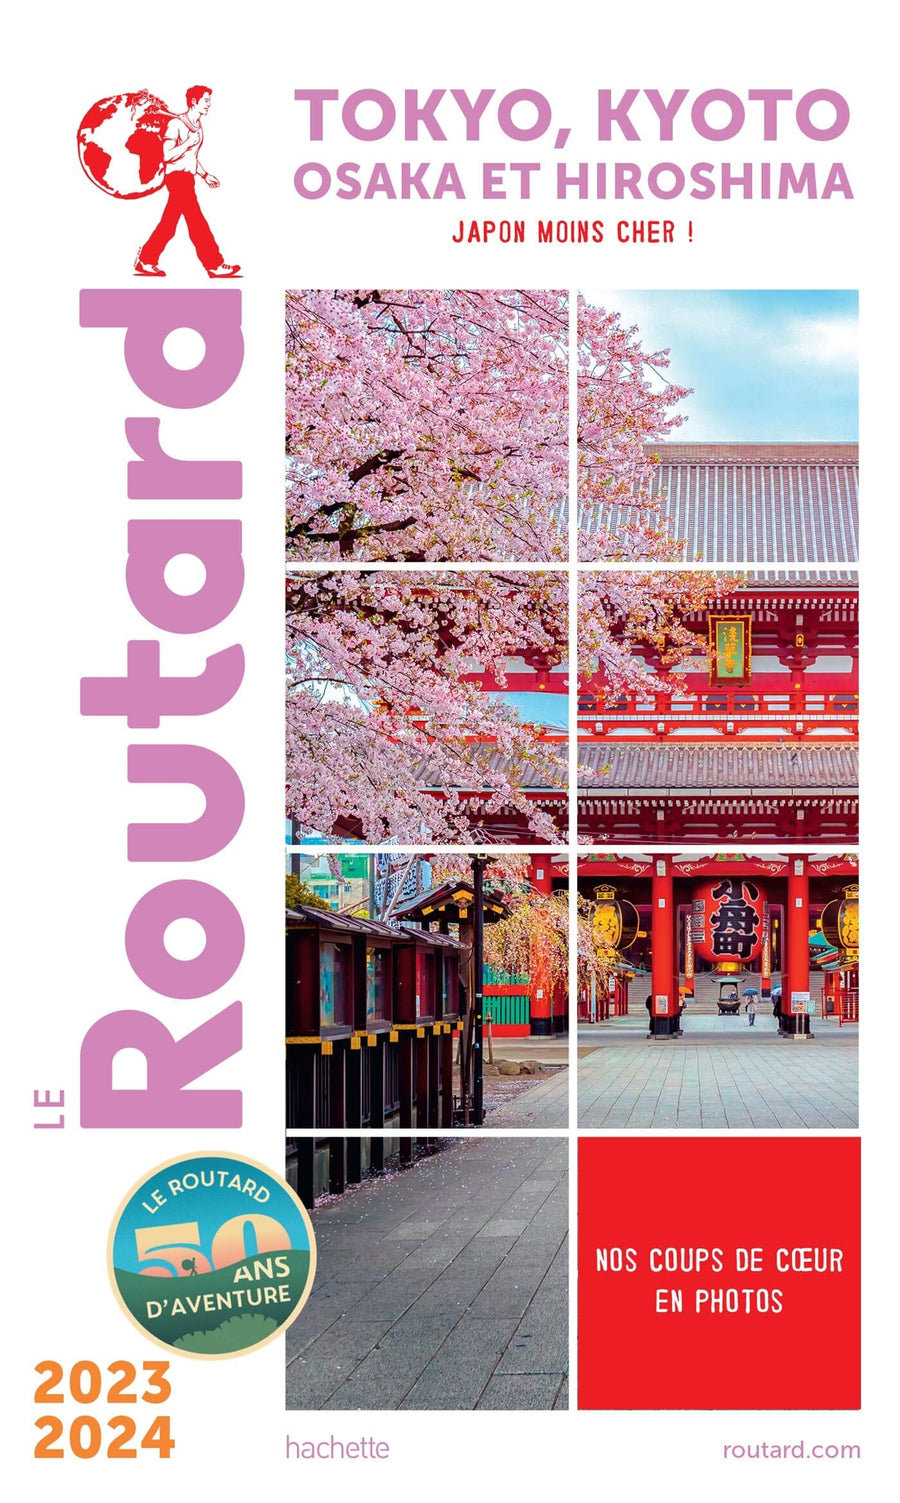 Guide du Routard - Tokyo, Kyoto, Osaka et Hiroshima 2023/24 | Hachette guide petit format Hachette 